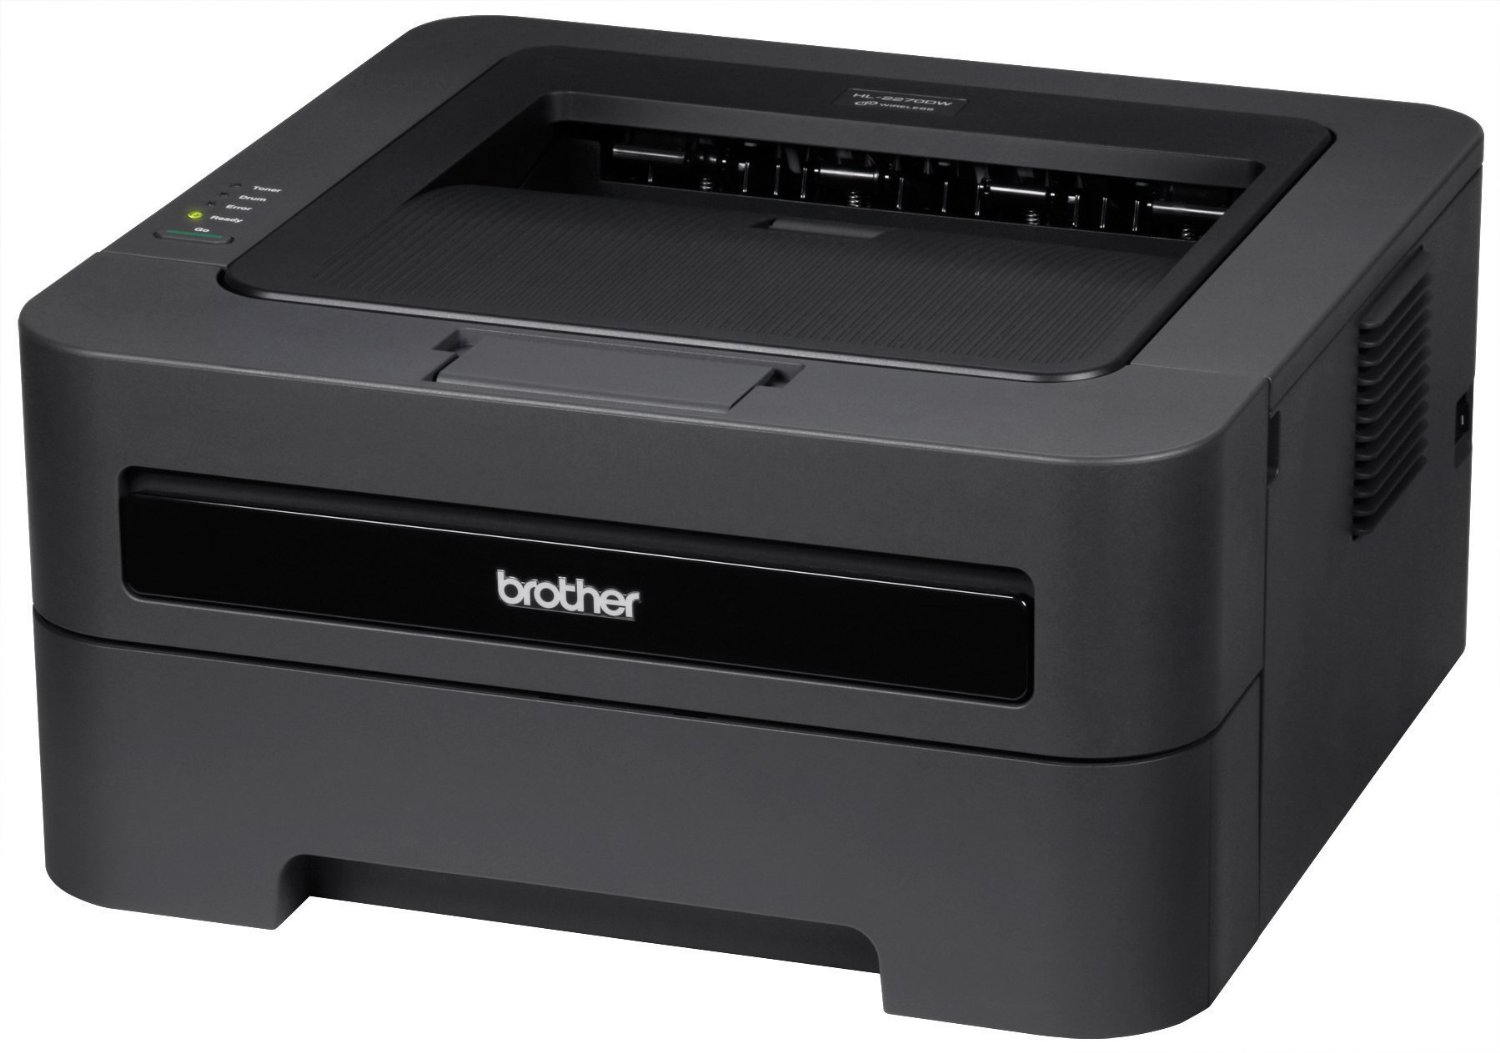 Brother HL-2270DW Compact Laser Printer-sale-refurb-01